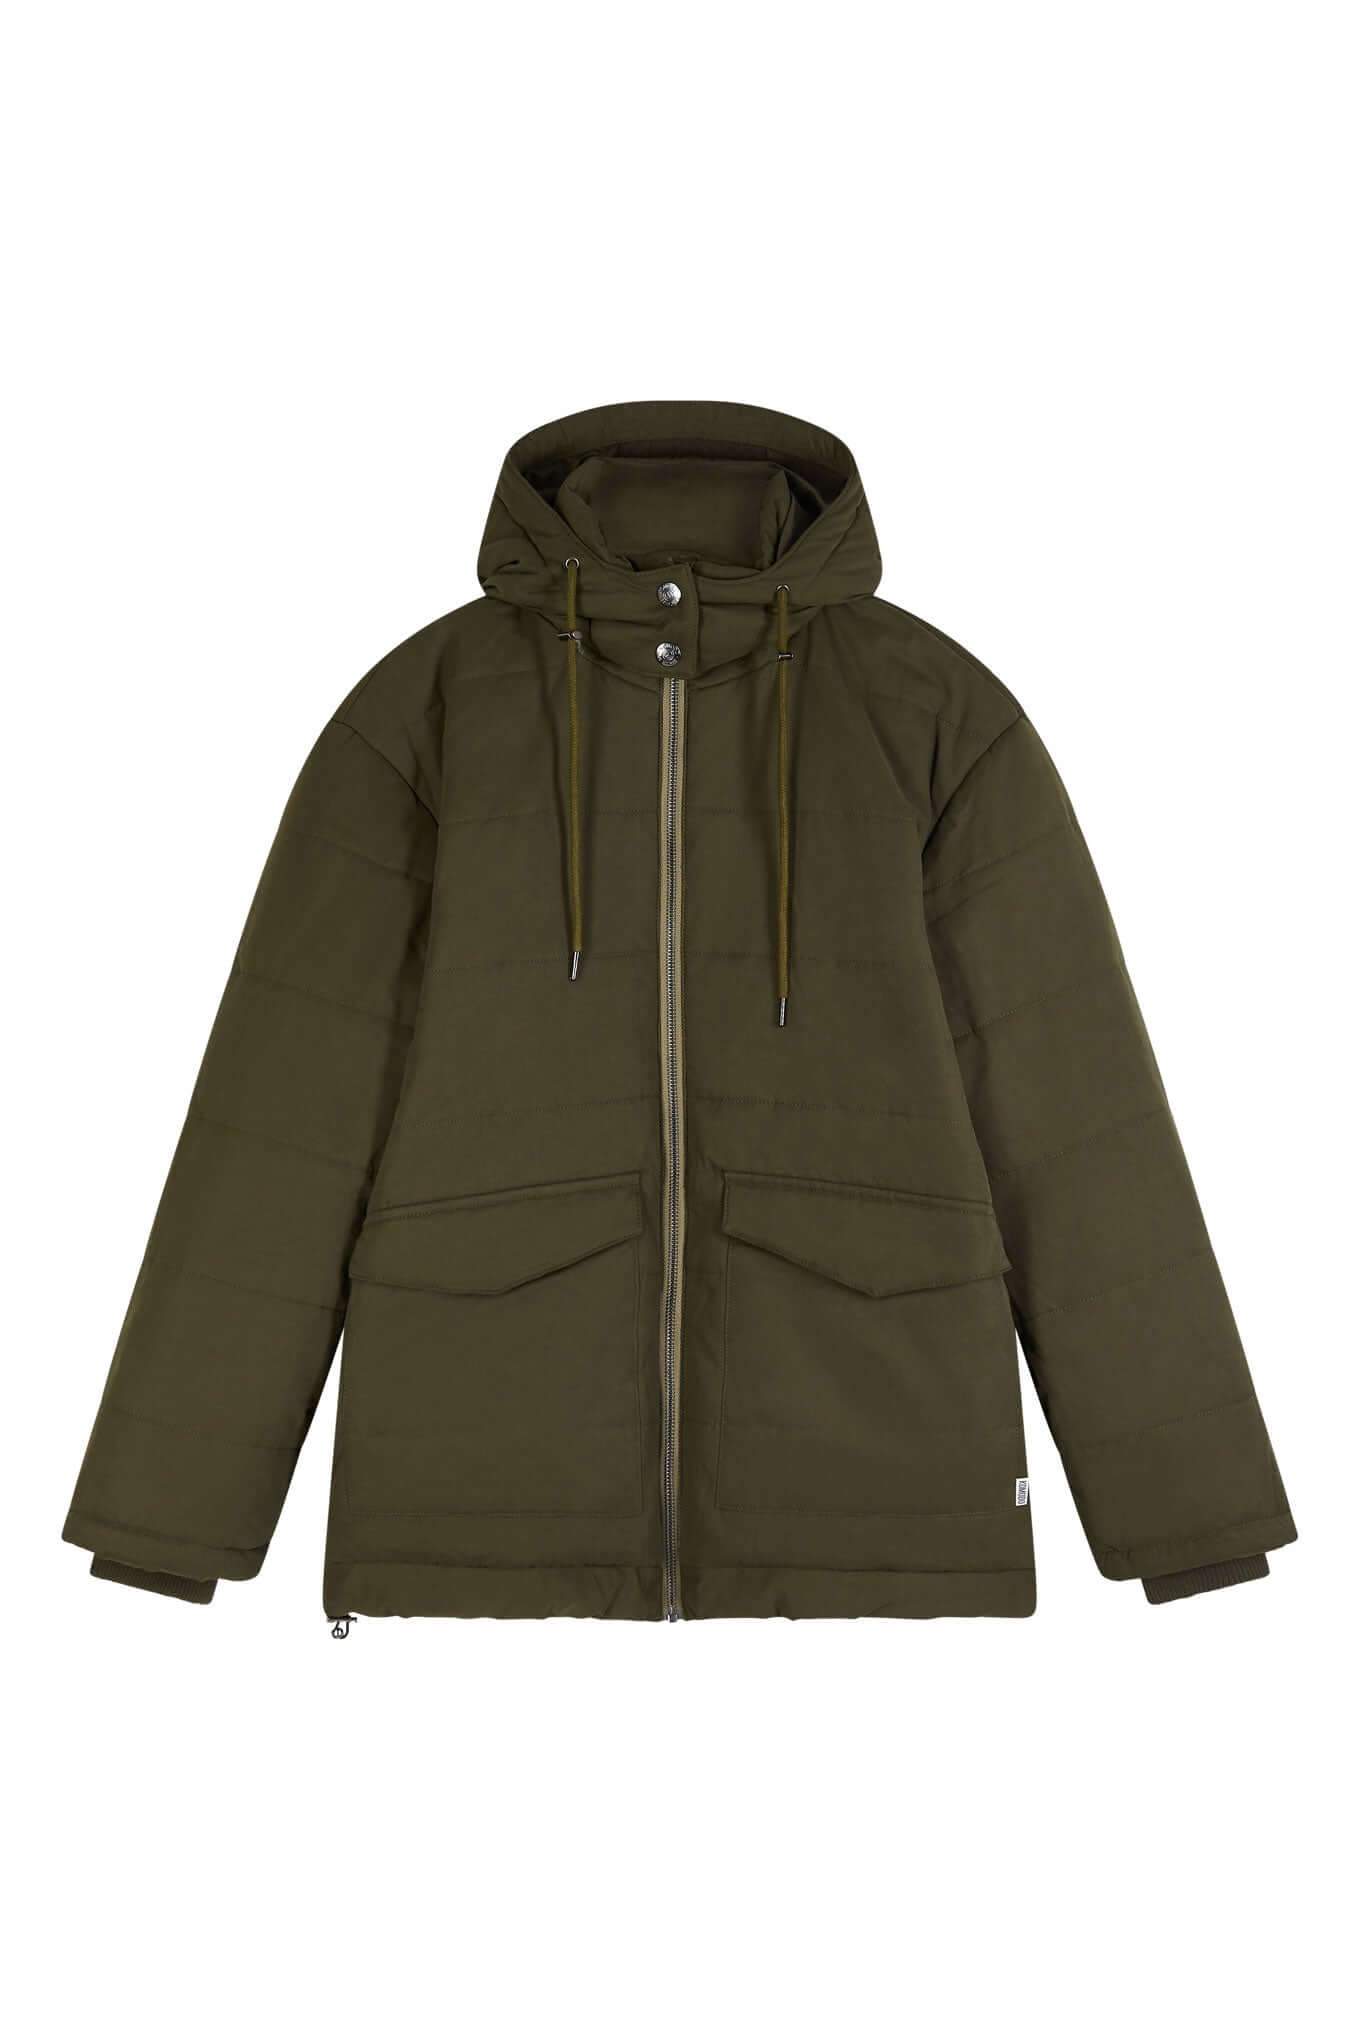 DAI Womens Recycled Fleece Jacket Khaki, Size 2 / UK 10 / EUR 38